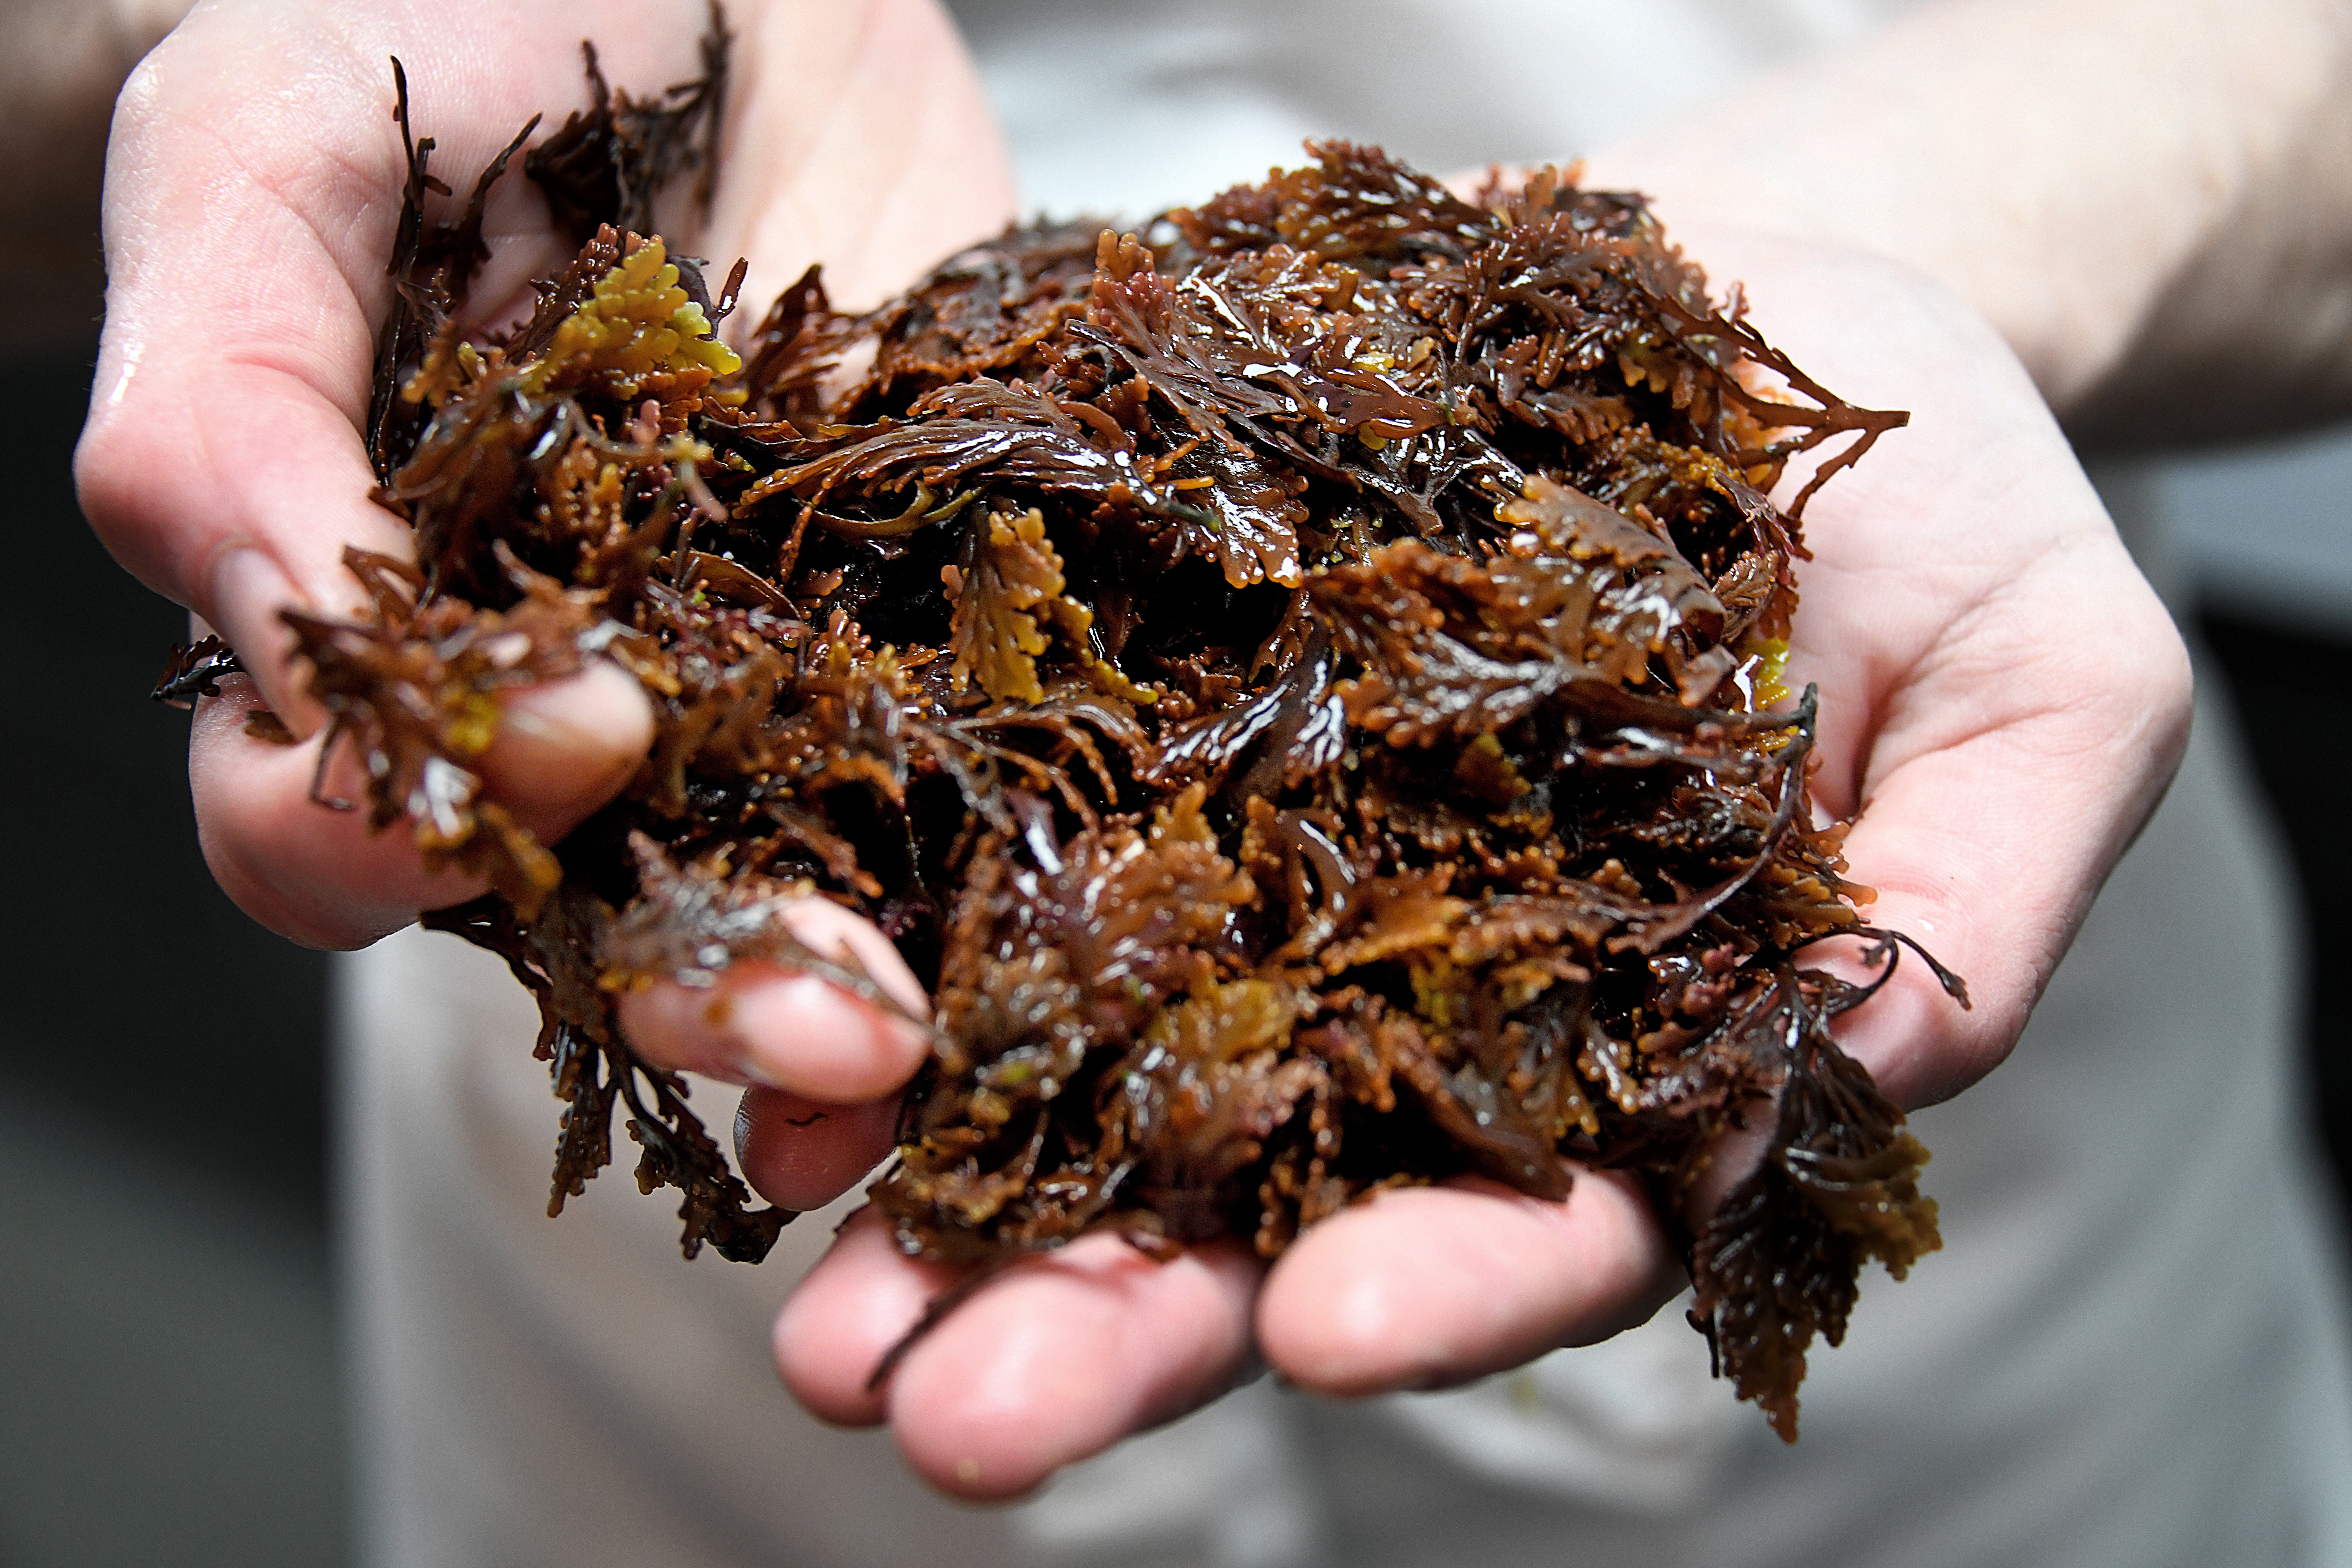 Often misunderstood, seaweed has far-reaching uses